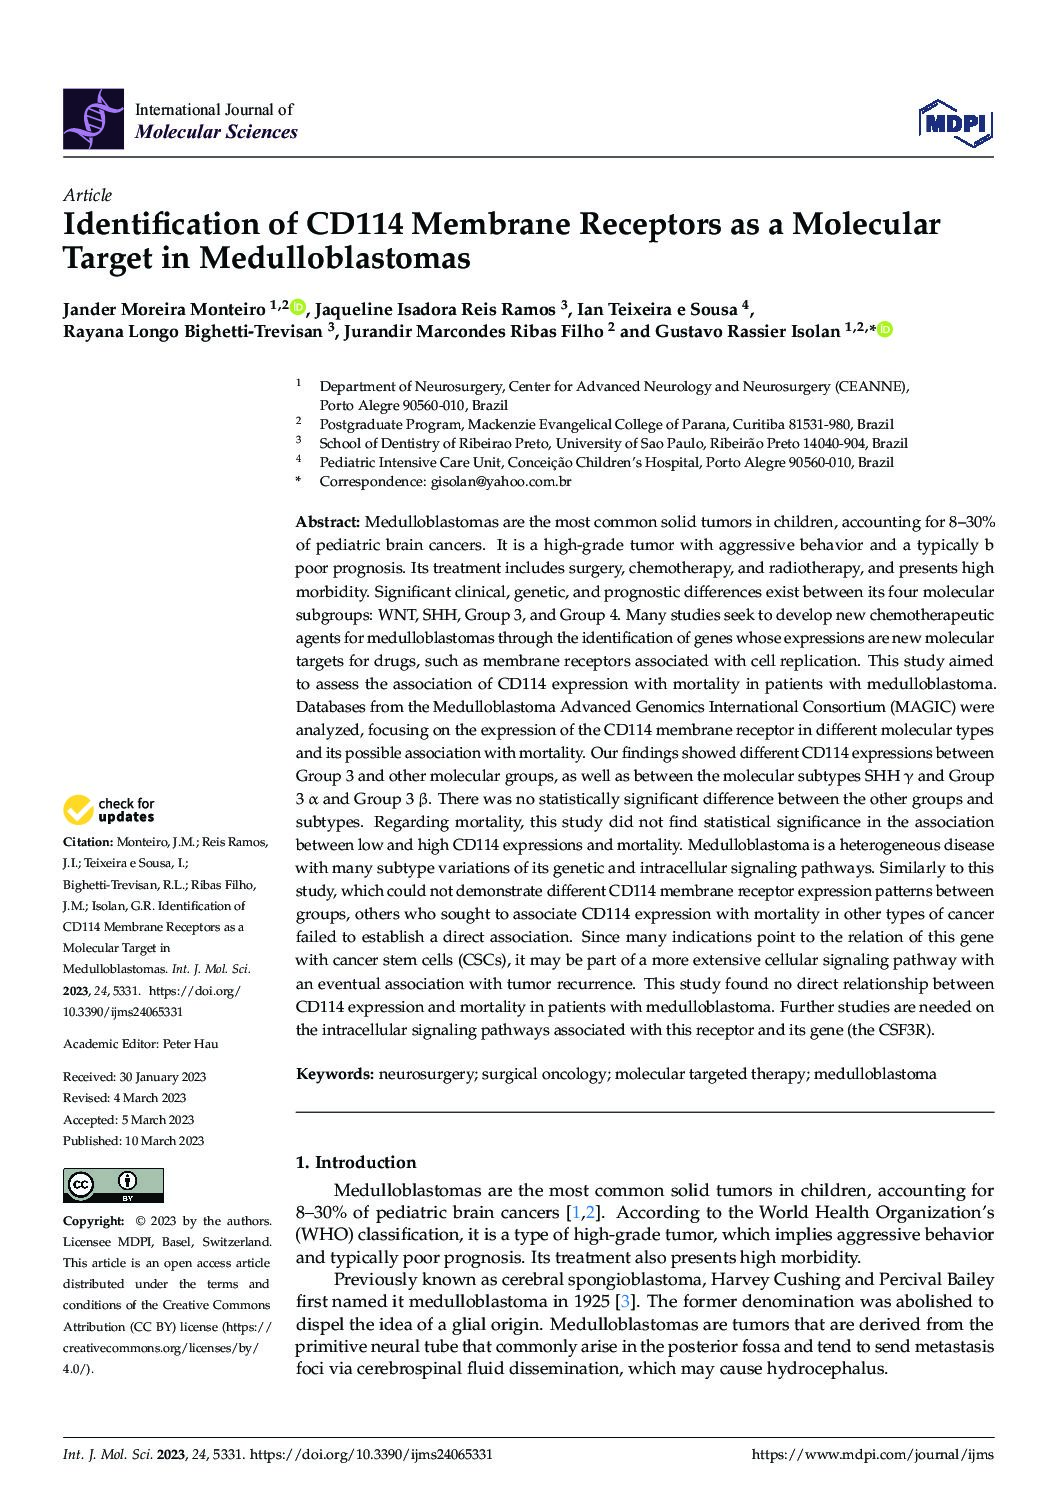 Identification Of CD114 Membrane Receptors As A Molecular Target In Medulloblastomas